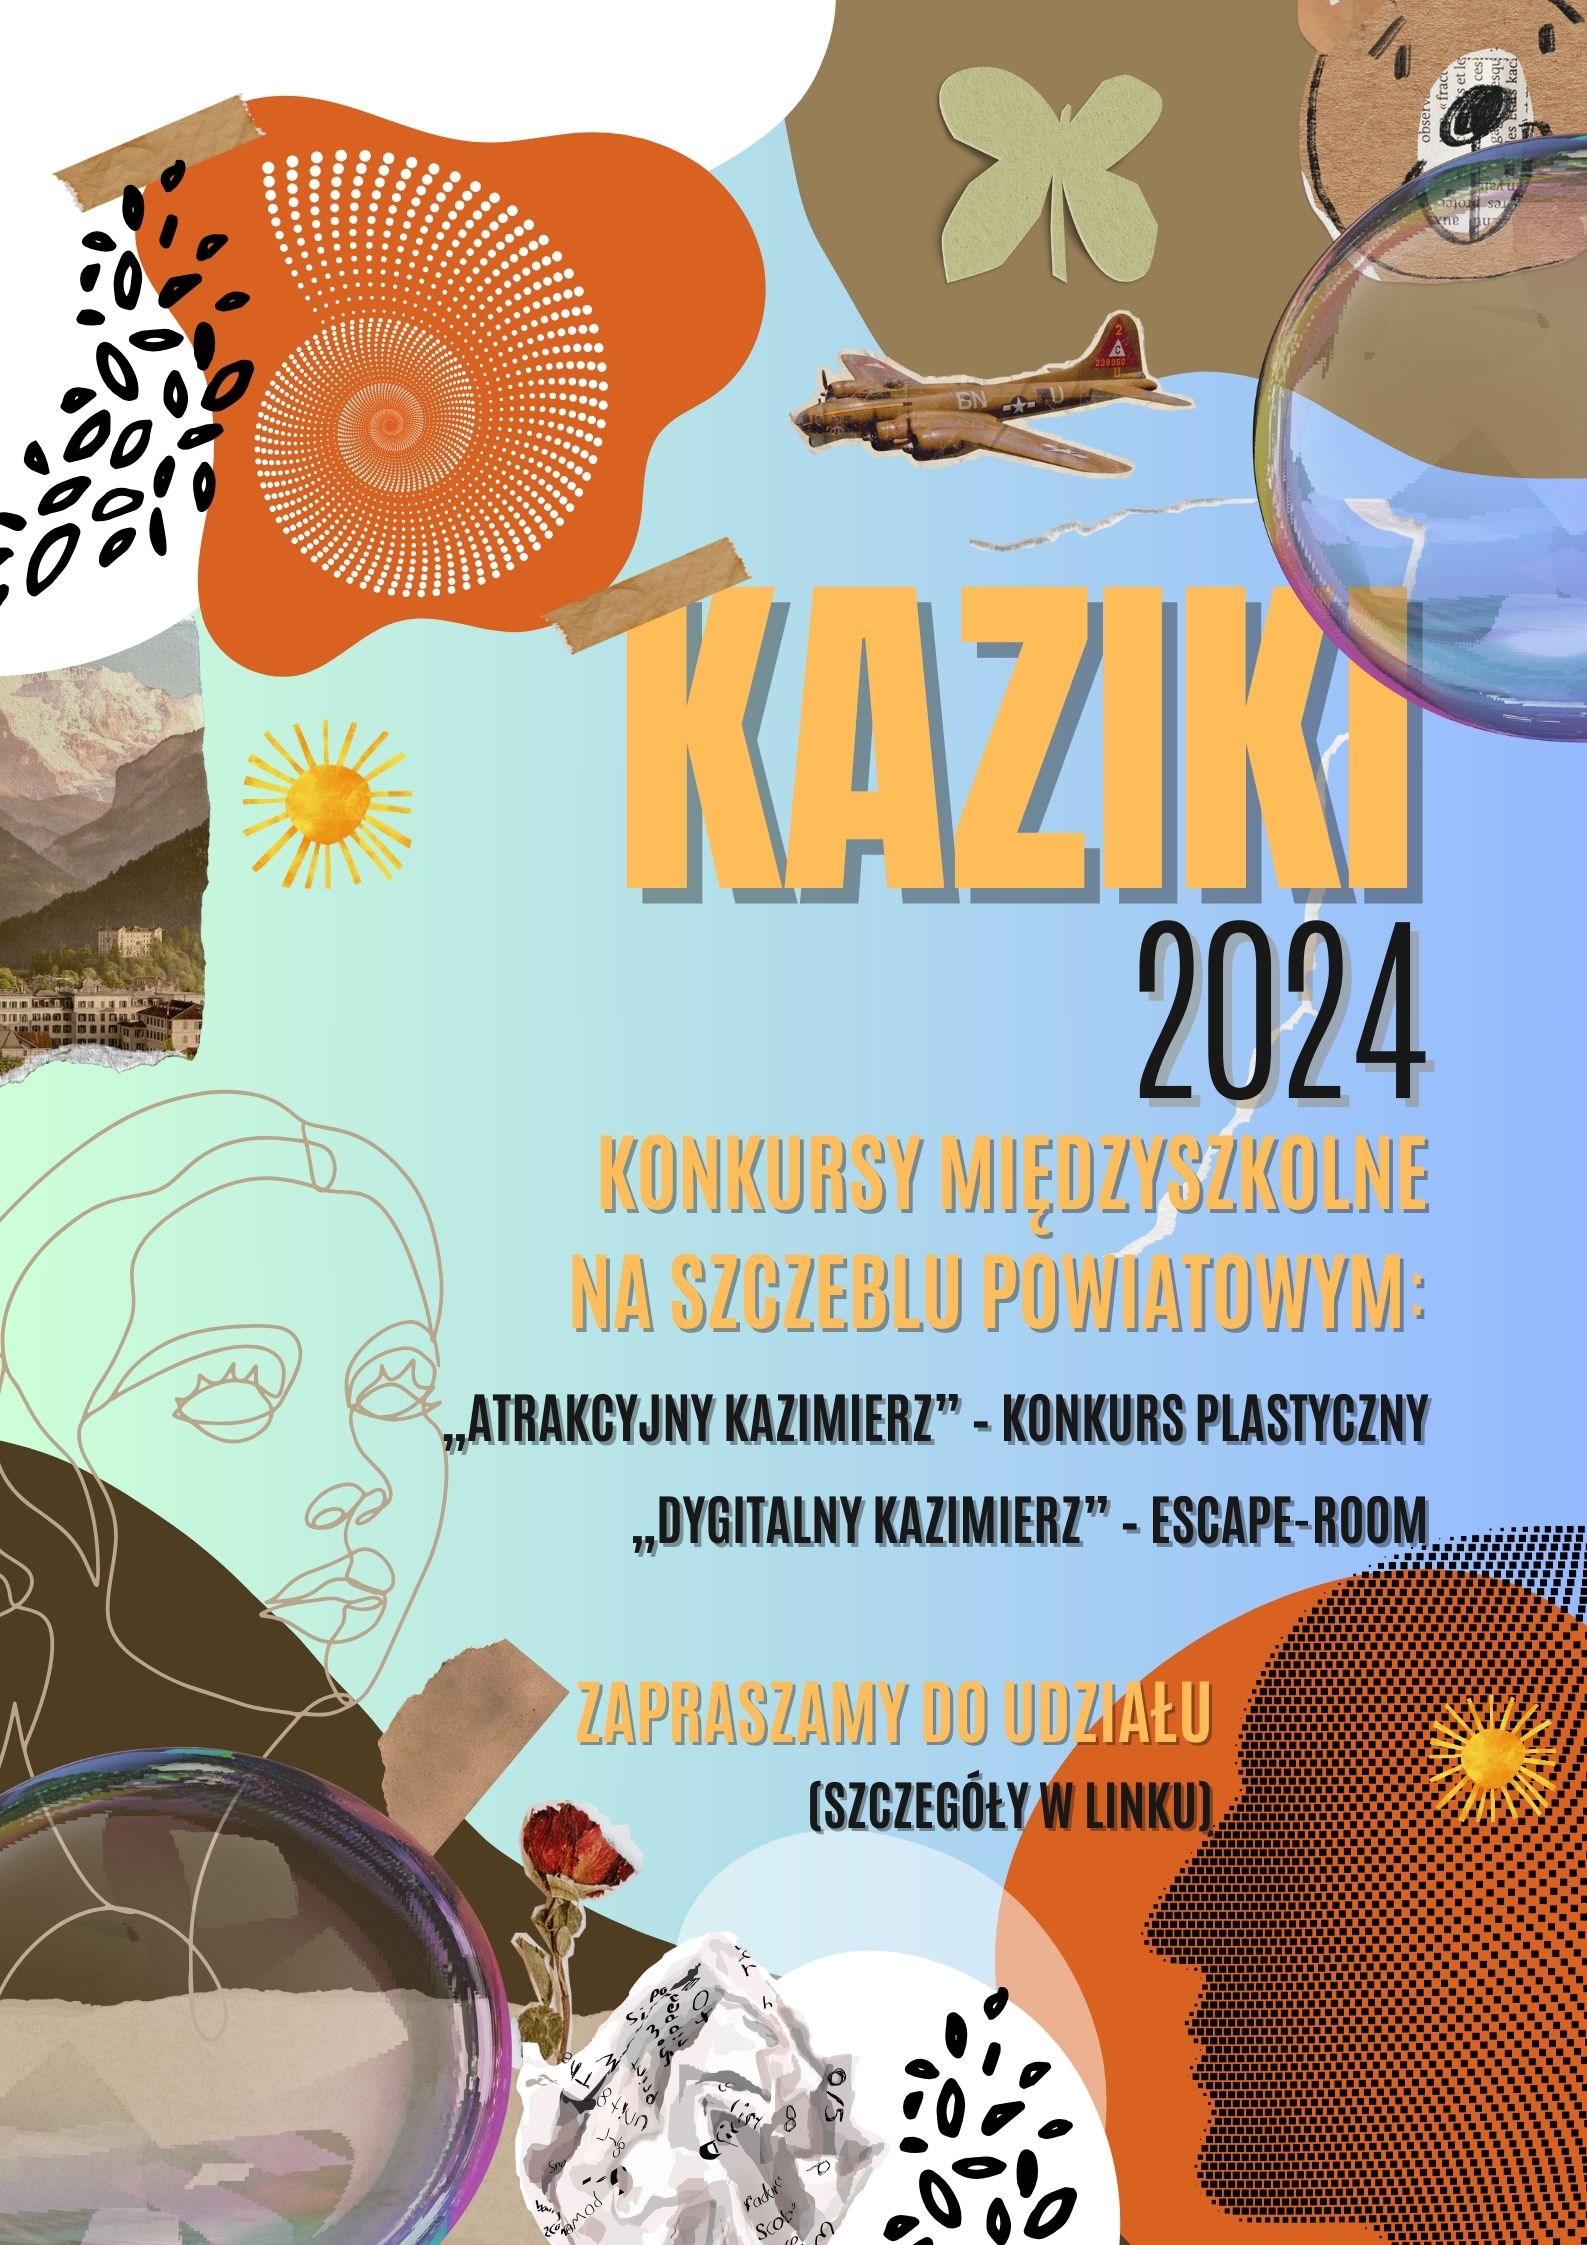 Plakat Kaziki 2024a